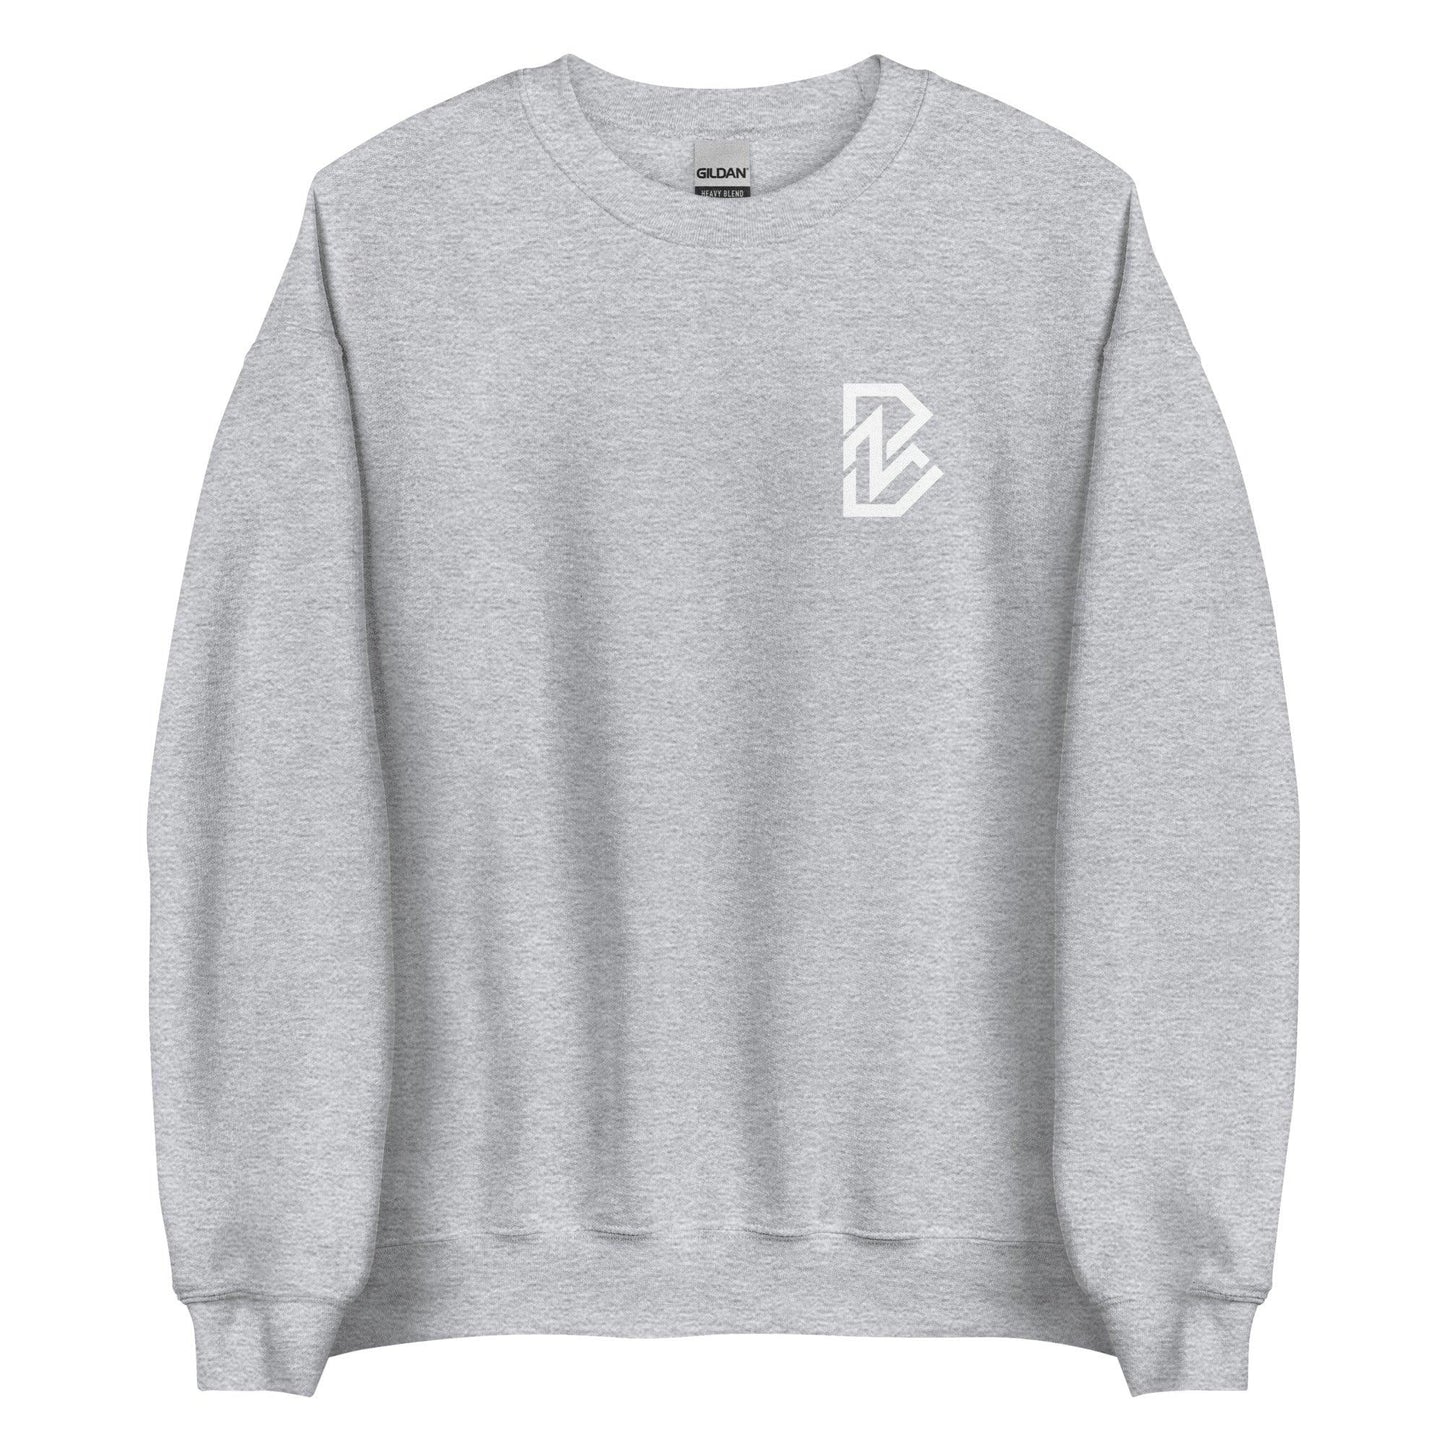 Brandon Neely “Signature” Sweatshirt - Fan Arch